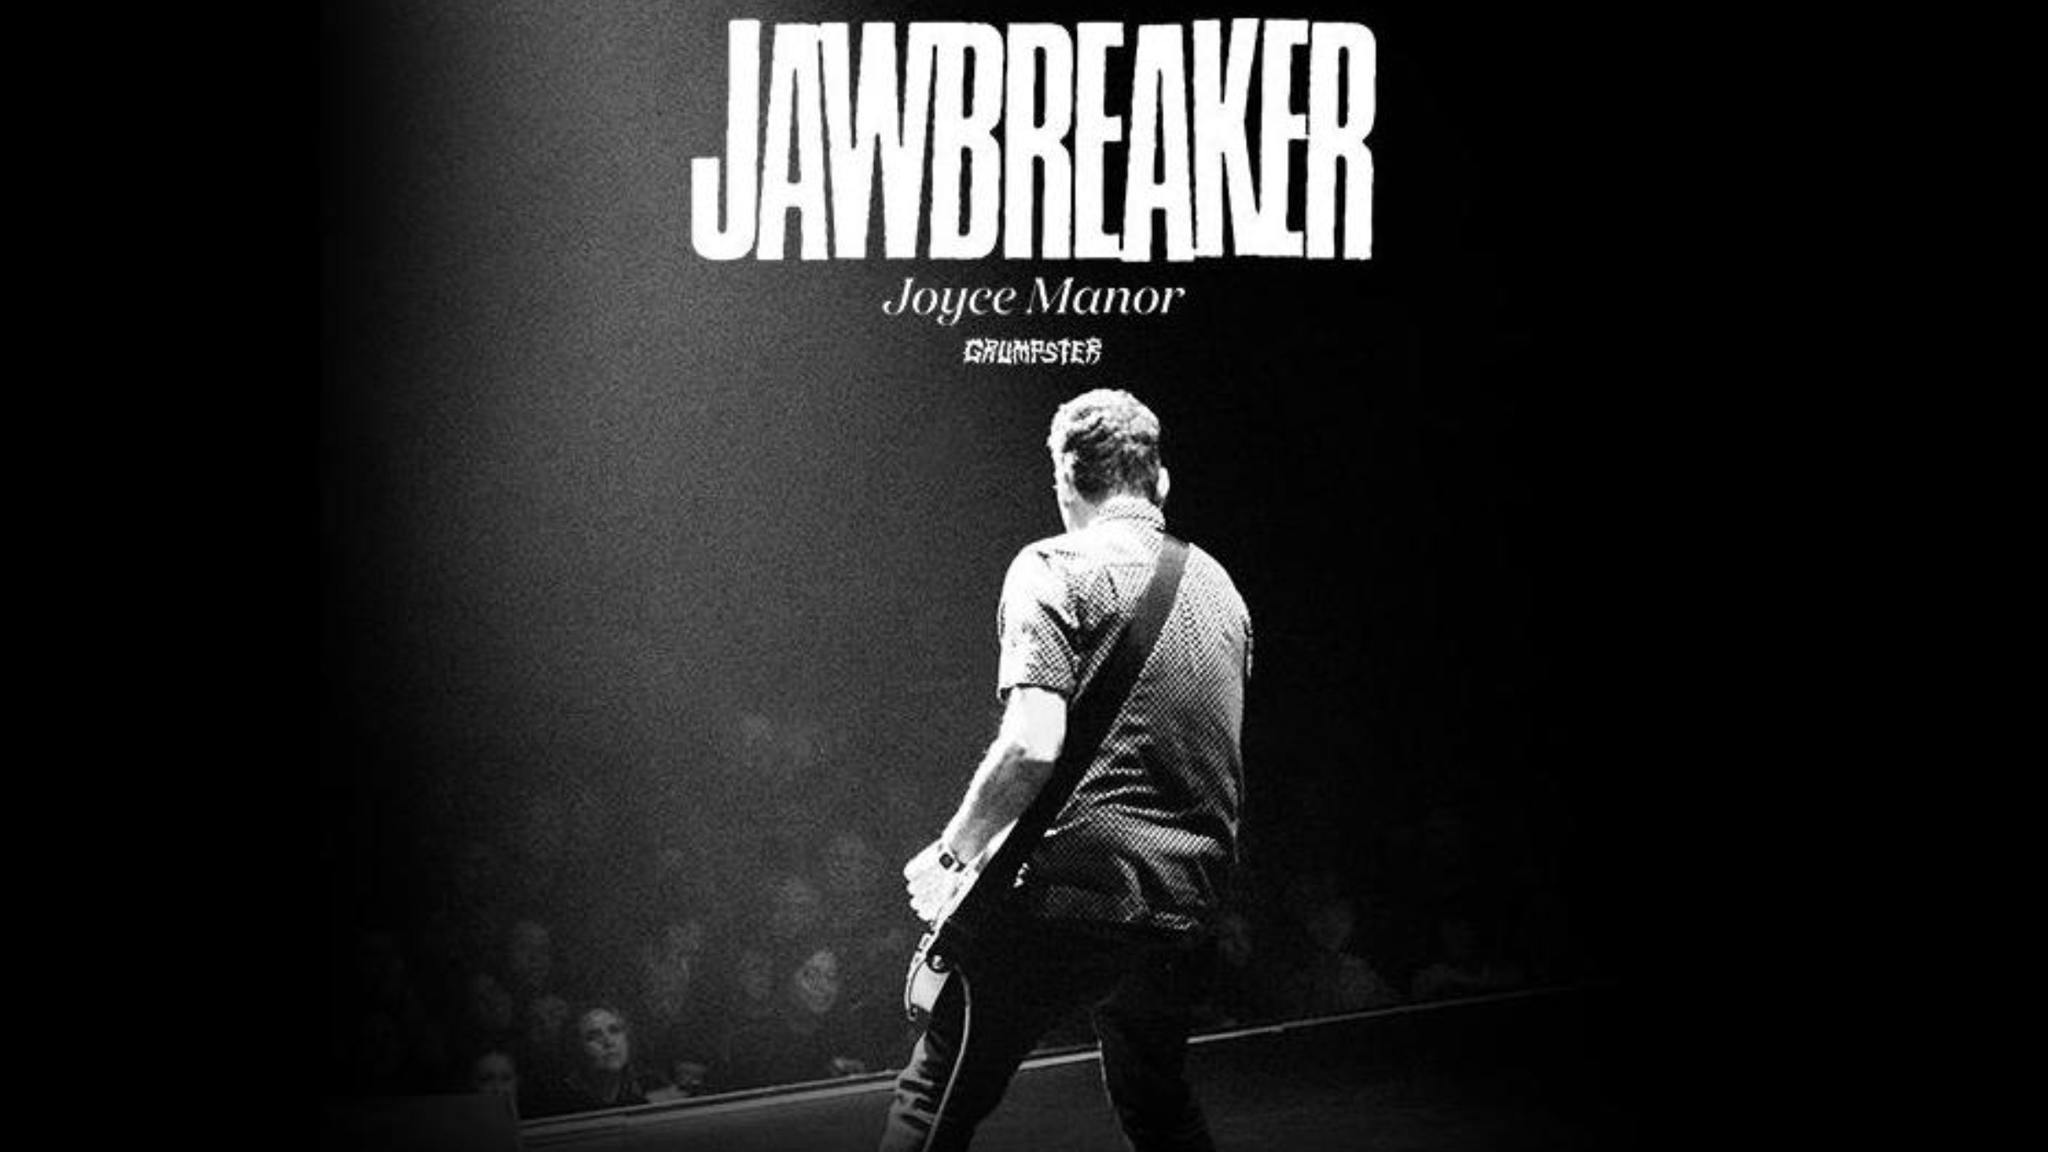 Jawbreaker announce U.S. tour with Joyce Manor and Grumpster